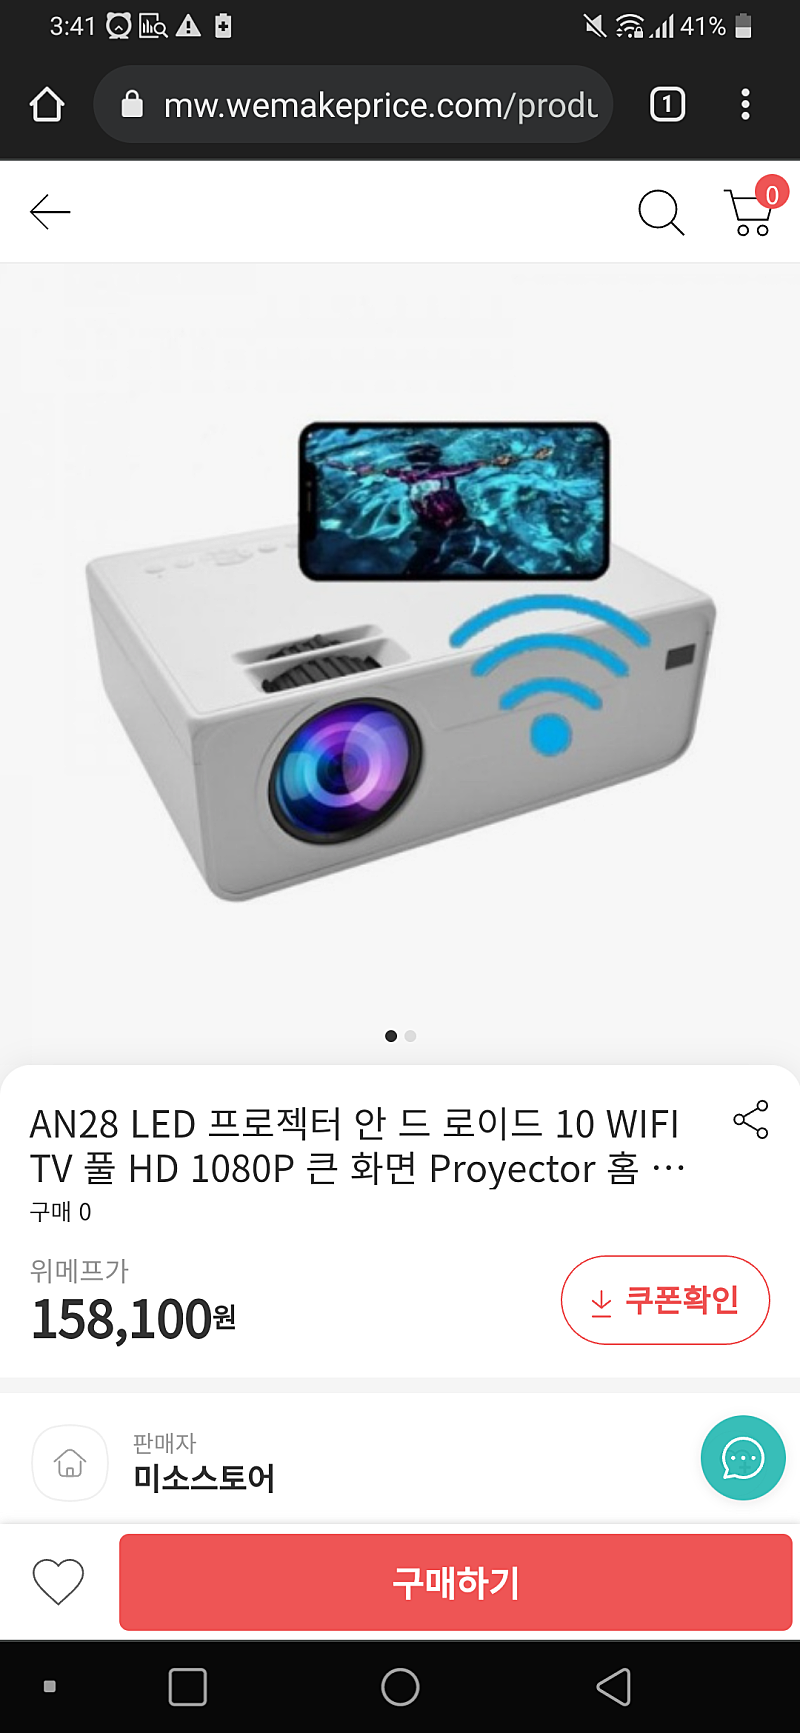 AN28 LED 프로젝터 73,000원 판매